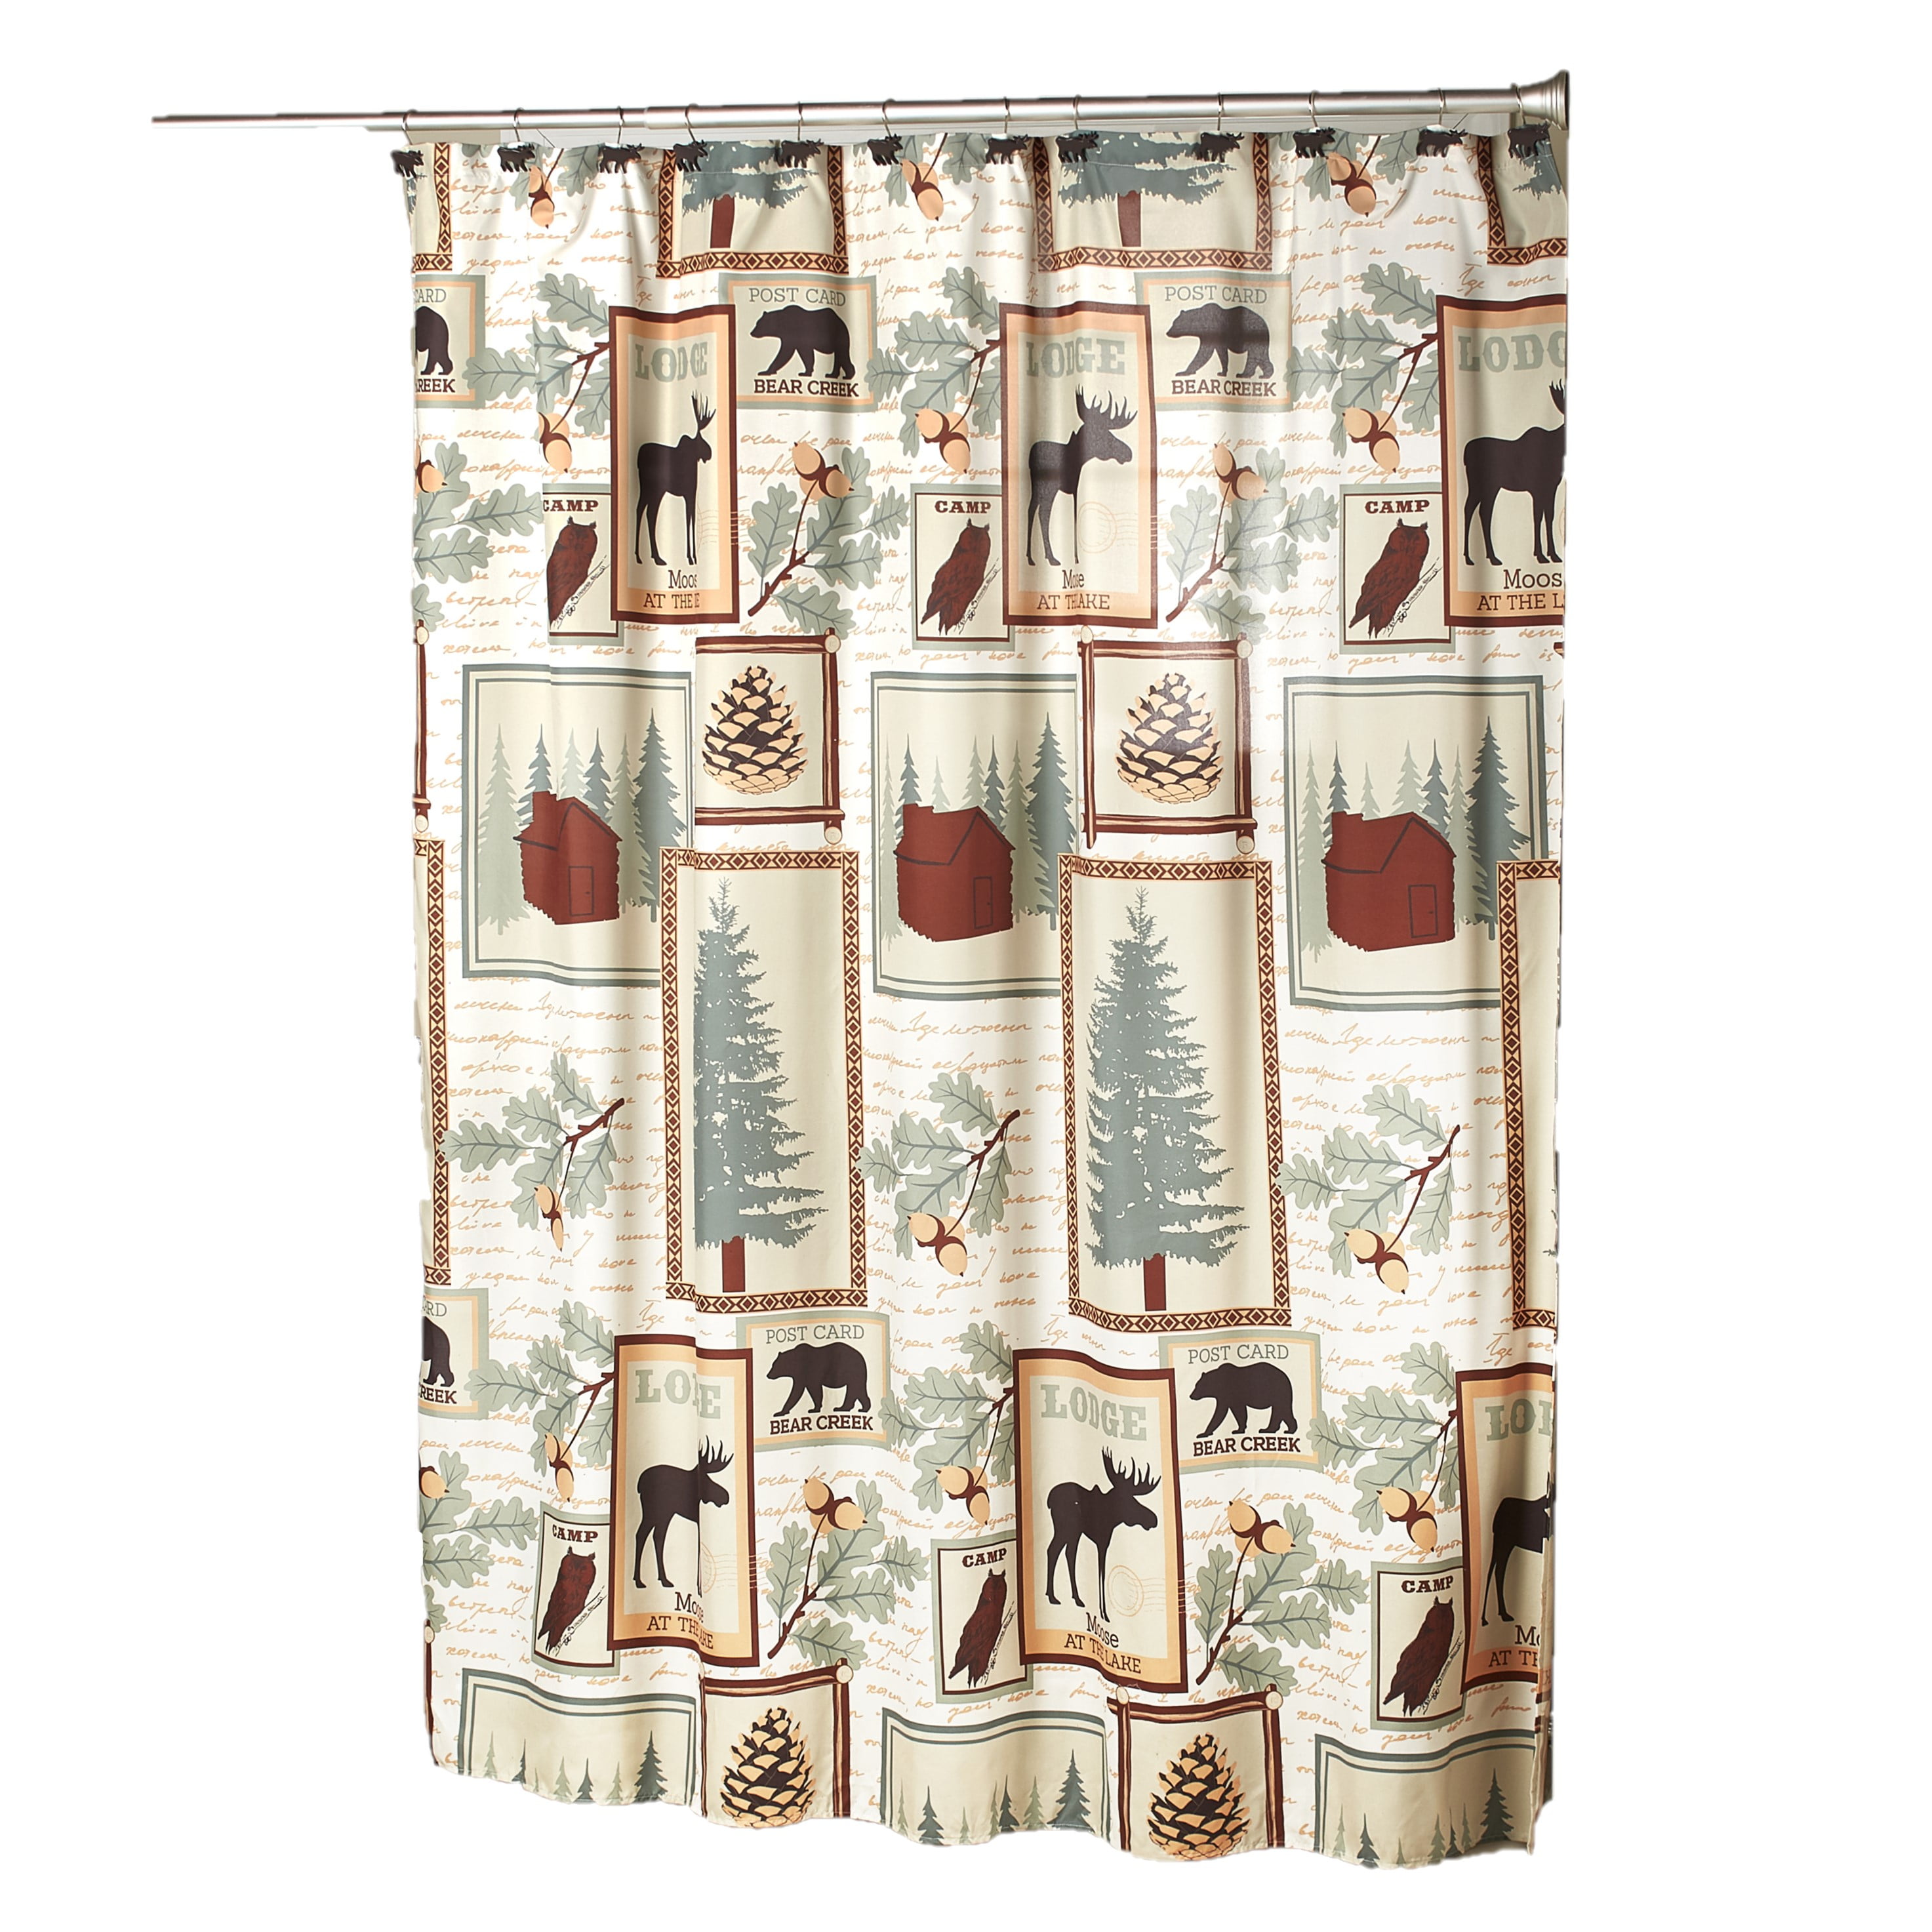 Gray Color Anchor Rustic Wood Planks Fabric Shower Curtain Set Bathroom Decor LB 